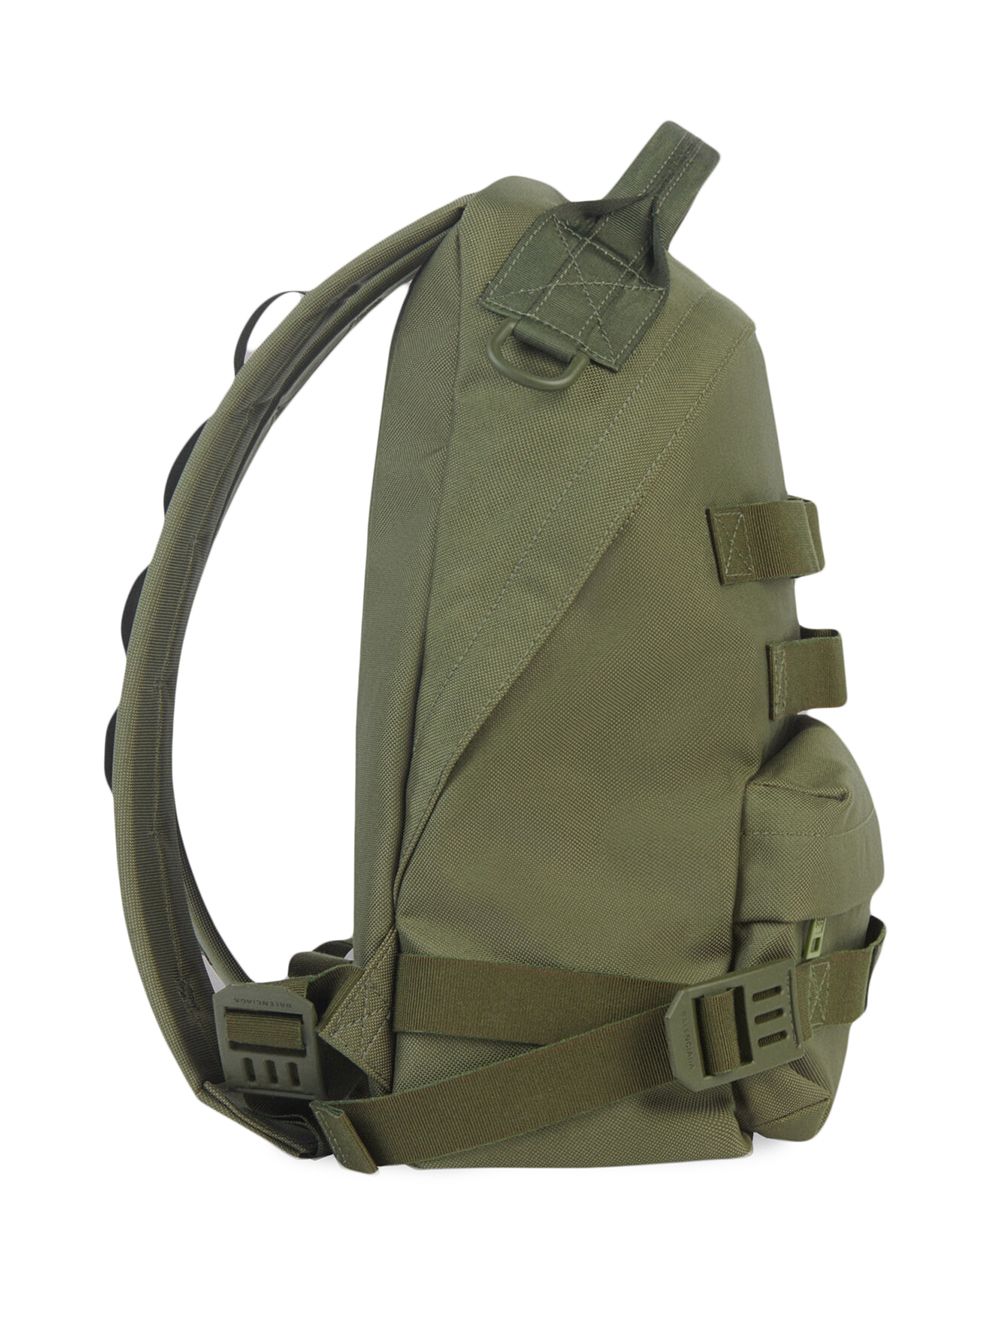 фото Balenciaga маленький рюкзак в стиле милитари